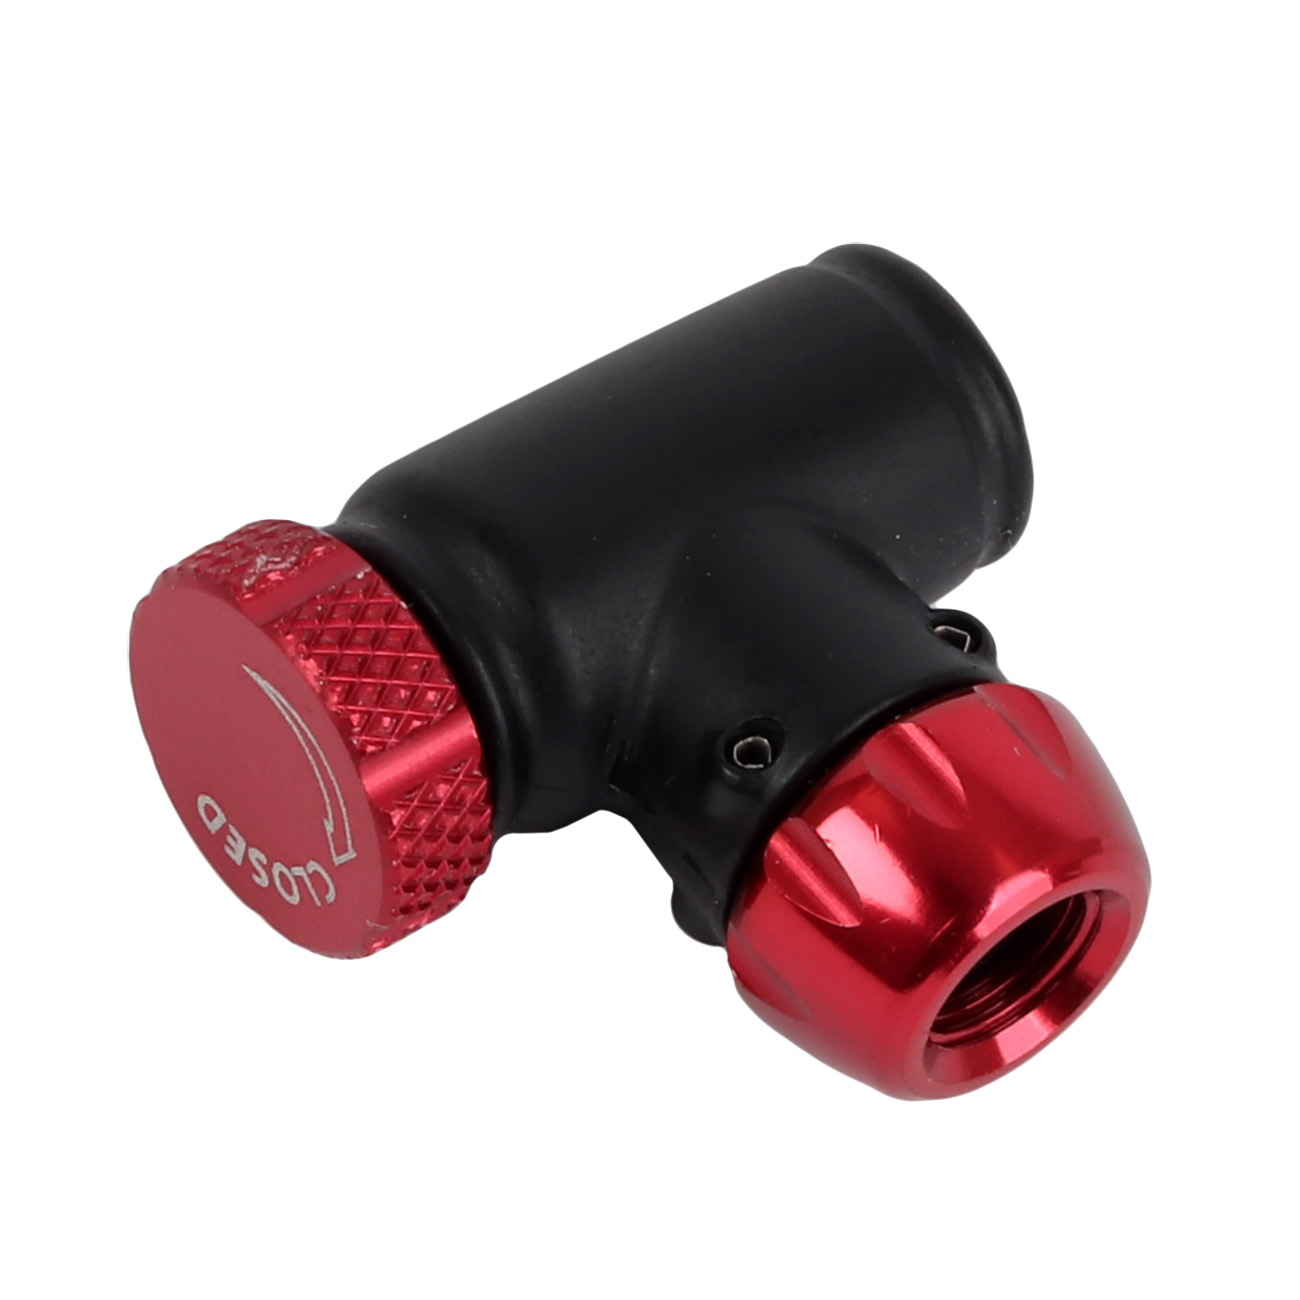 Productfoto van SILCA Eolo IV CO2 Patroonpomp - zwart/rood